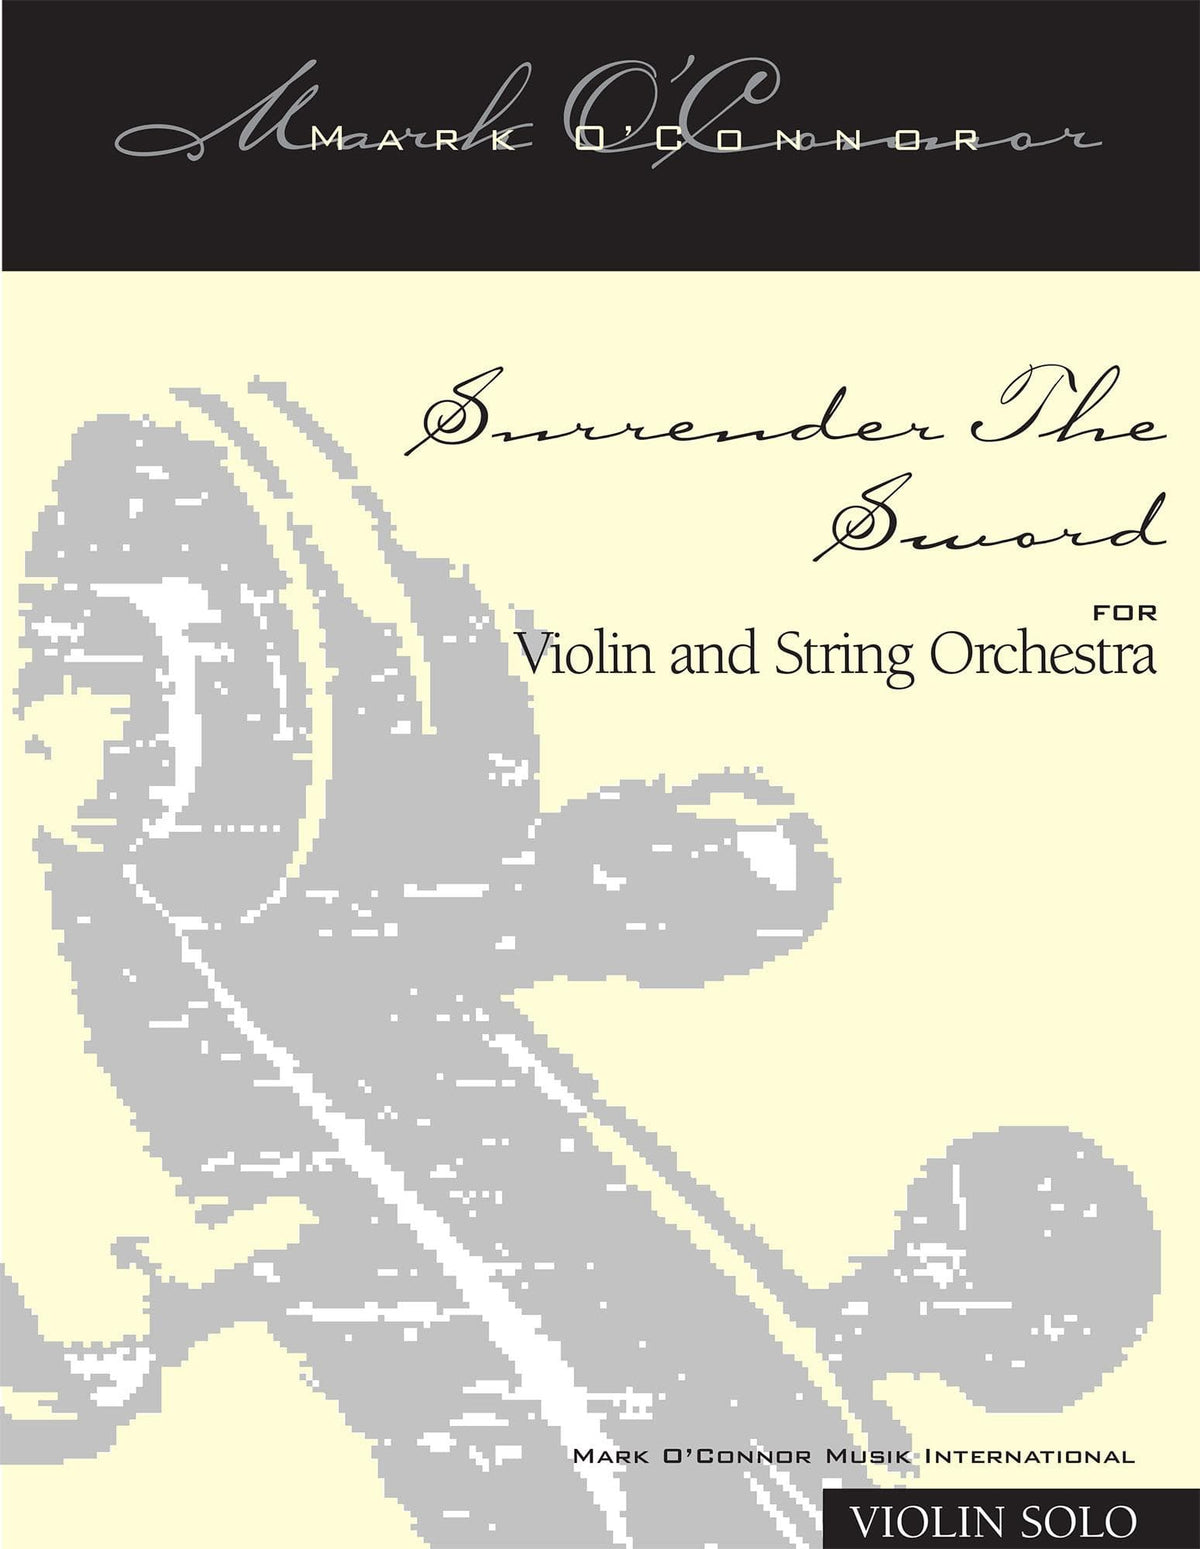 O'Connor, Mark - Surrender The Sword for Violin and String Orchestra - Violin Solo - Digital Download